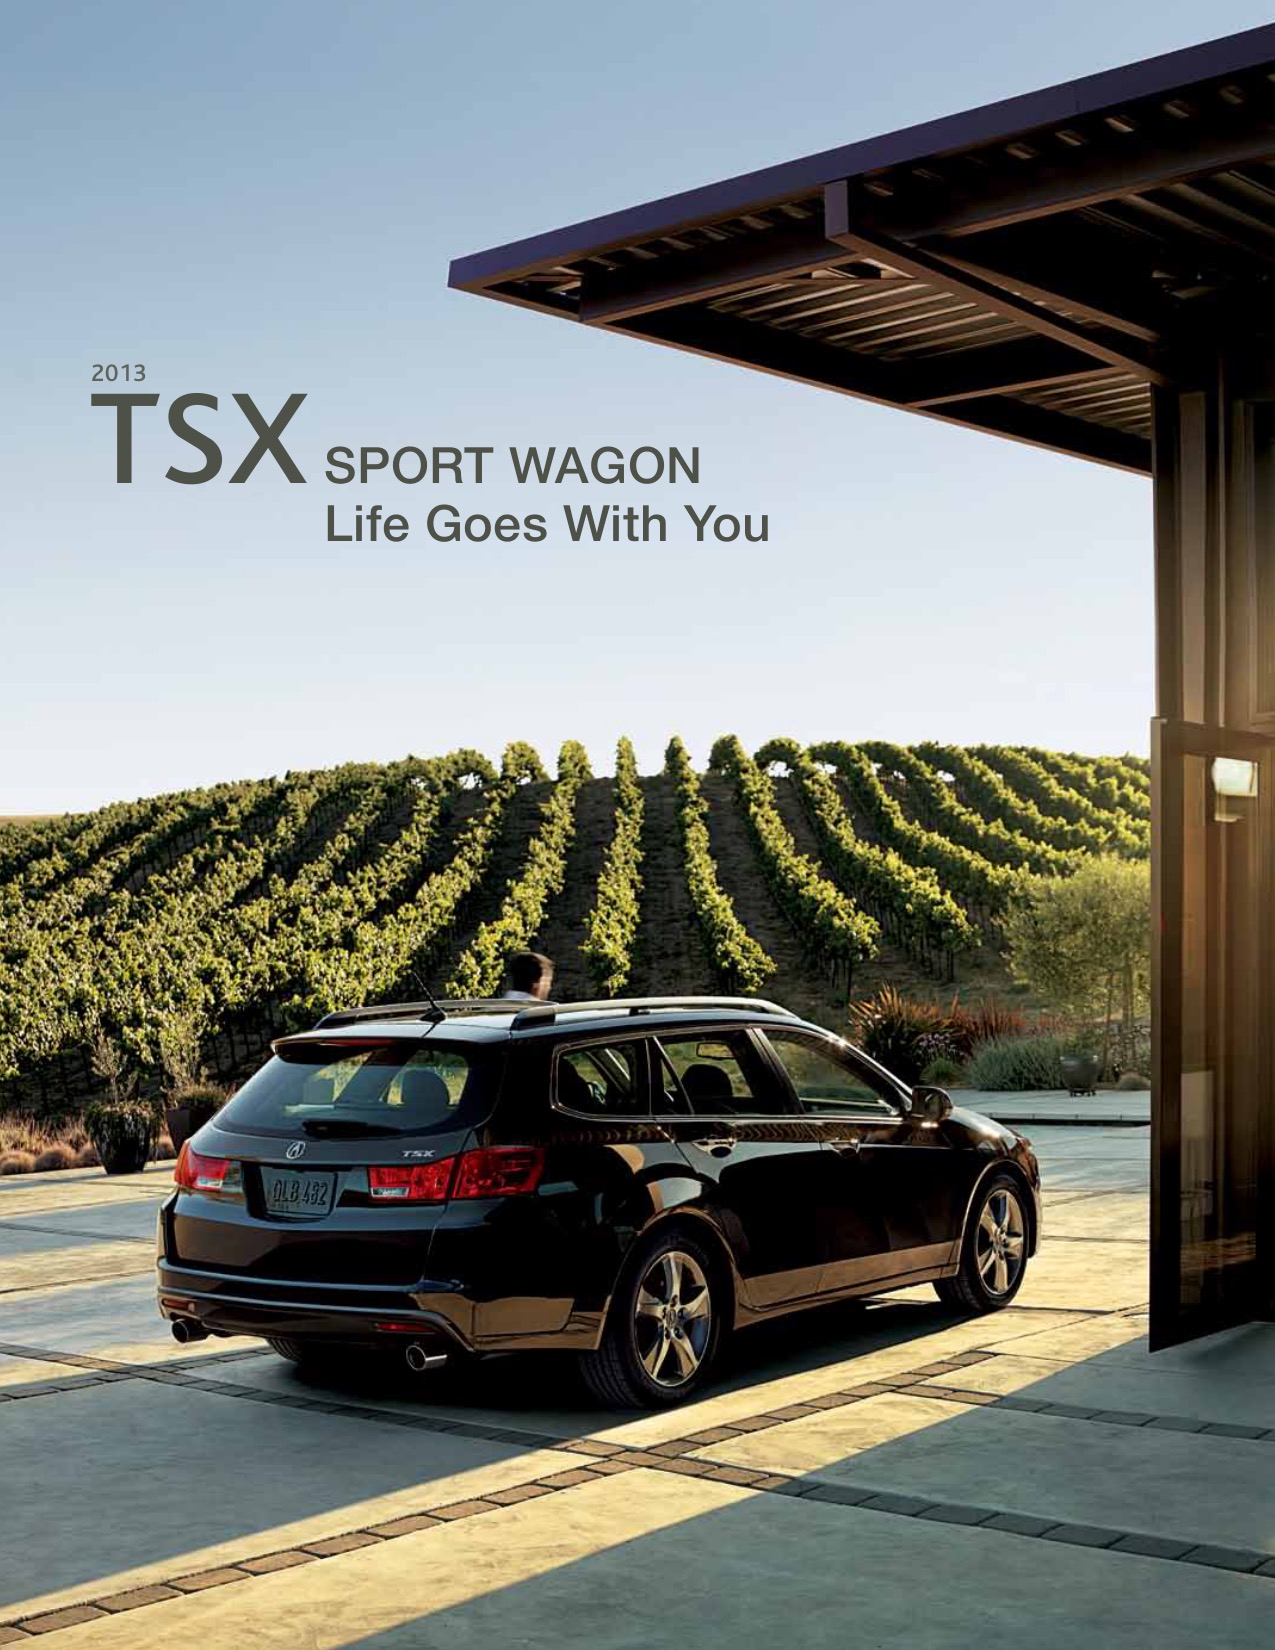 2013 Acura TSX Brochure